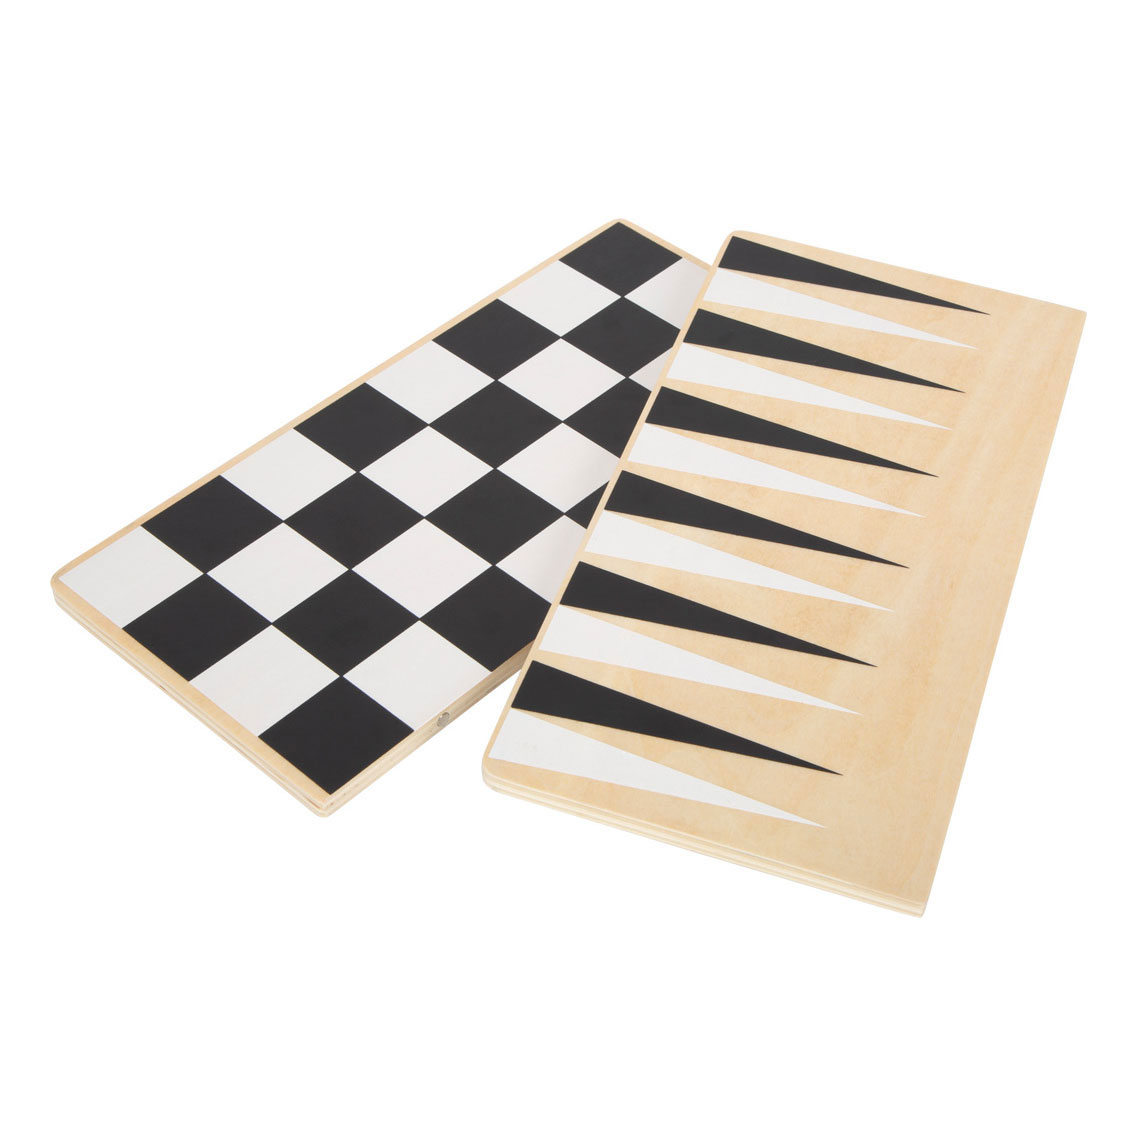 Small Foot  -  Schaak en Backgammon Spel (Golden Edition)